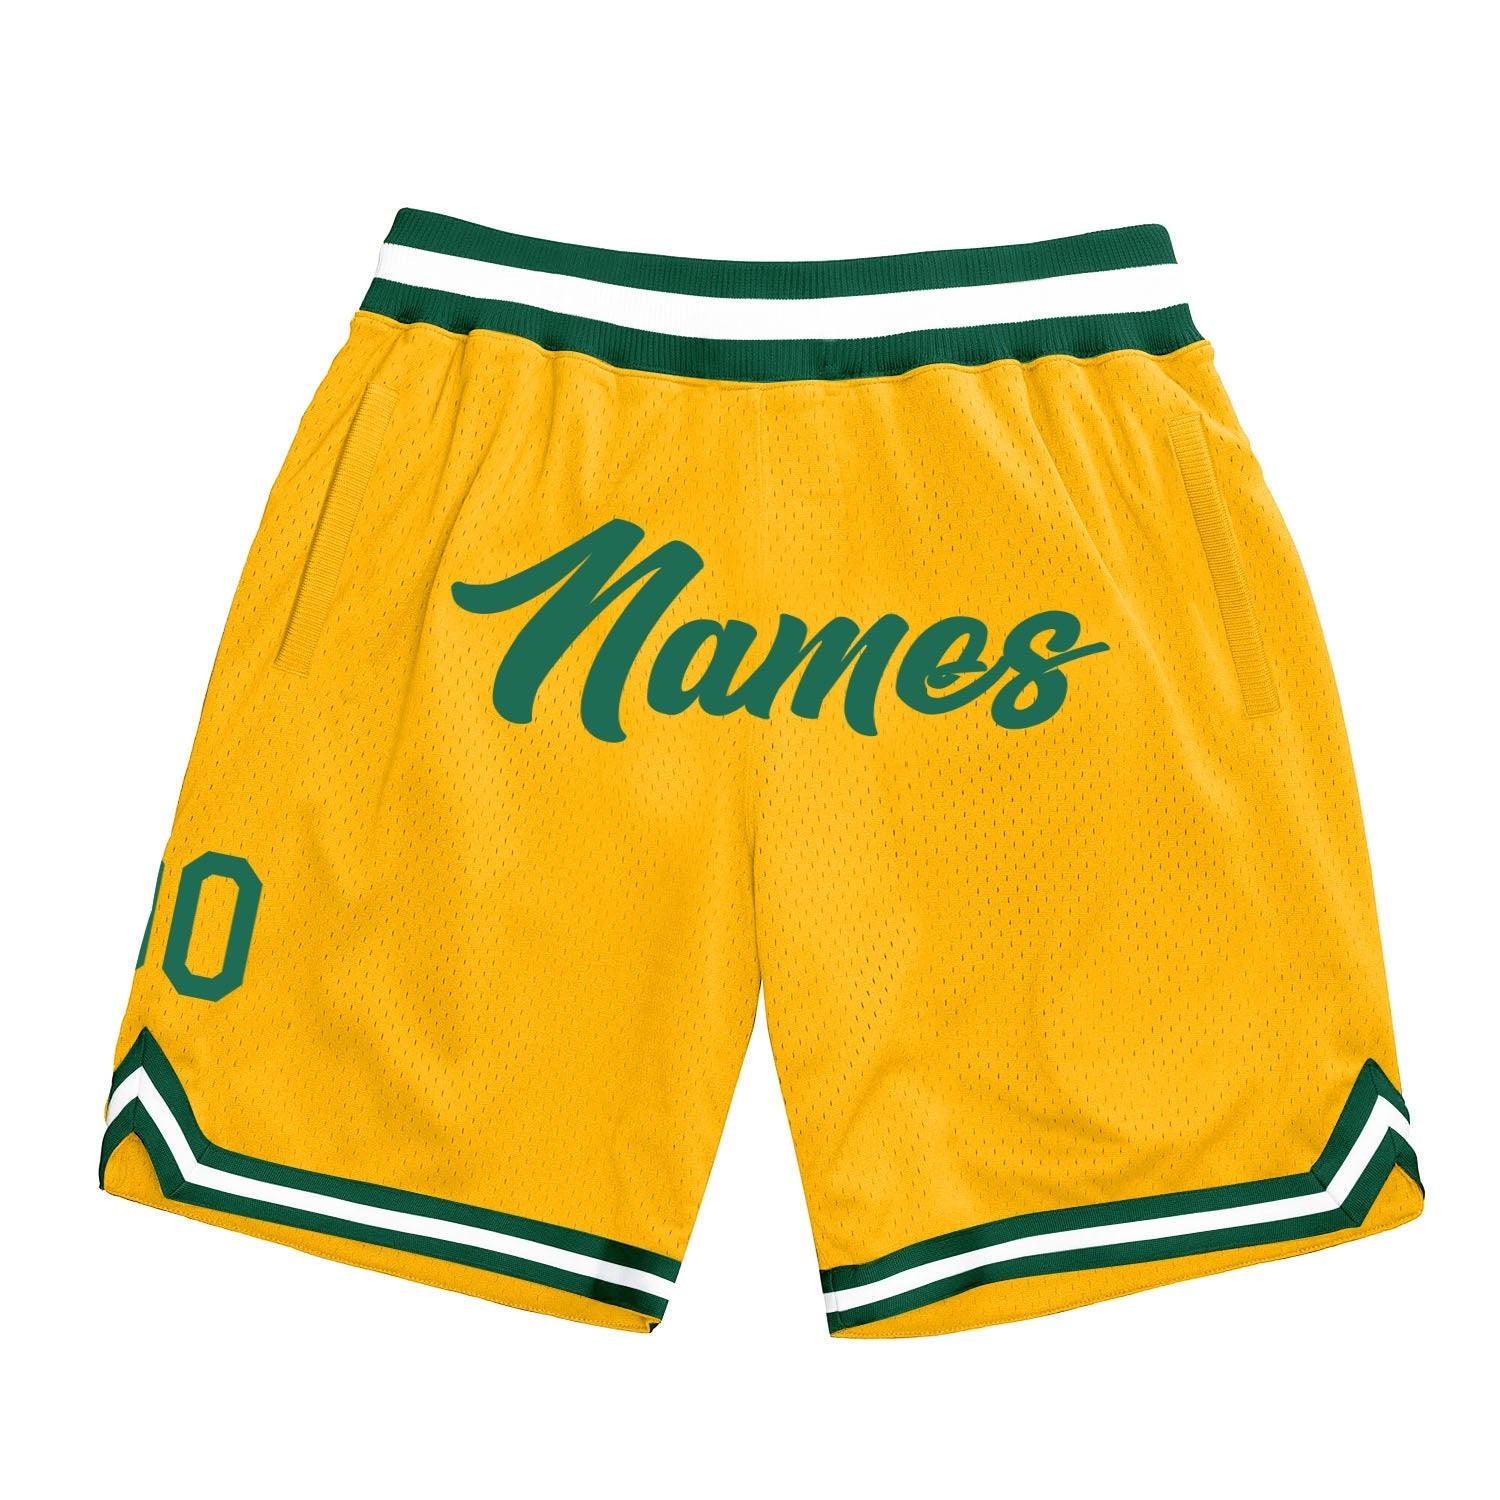 Shorts de basquete autênticos dourados Kelly verde-branco personalizados